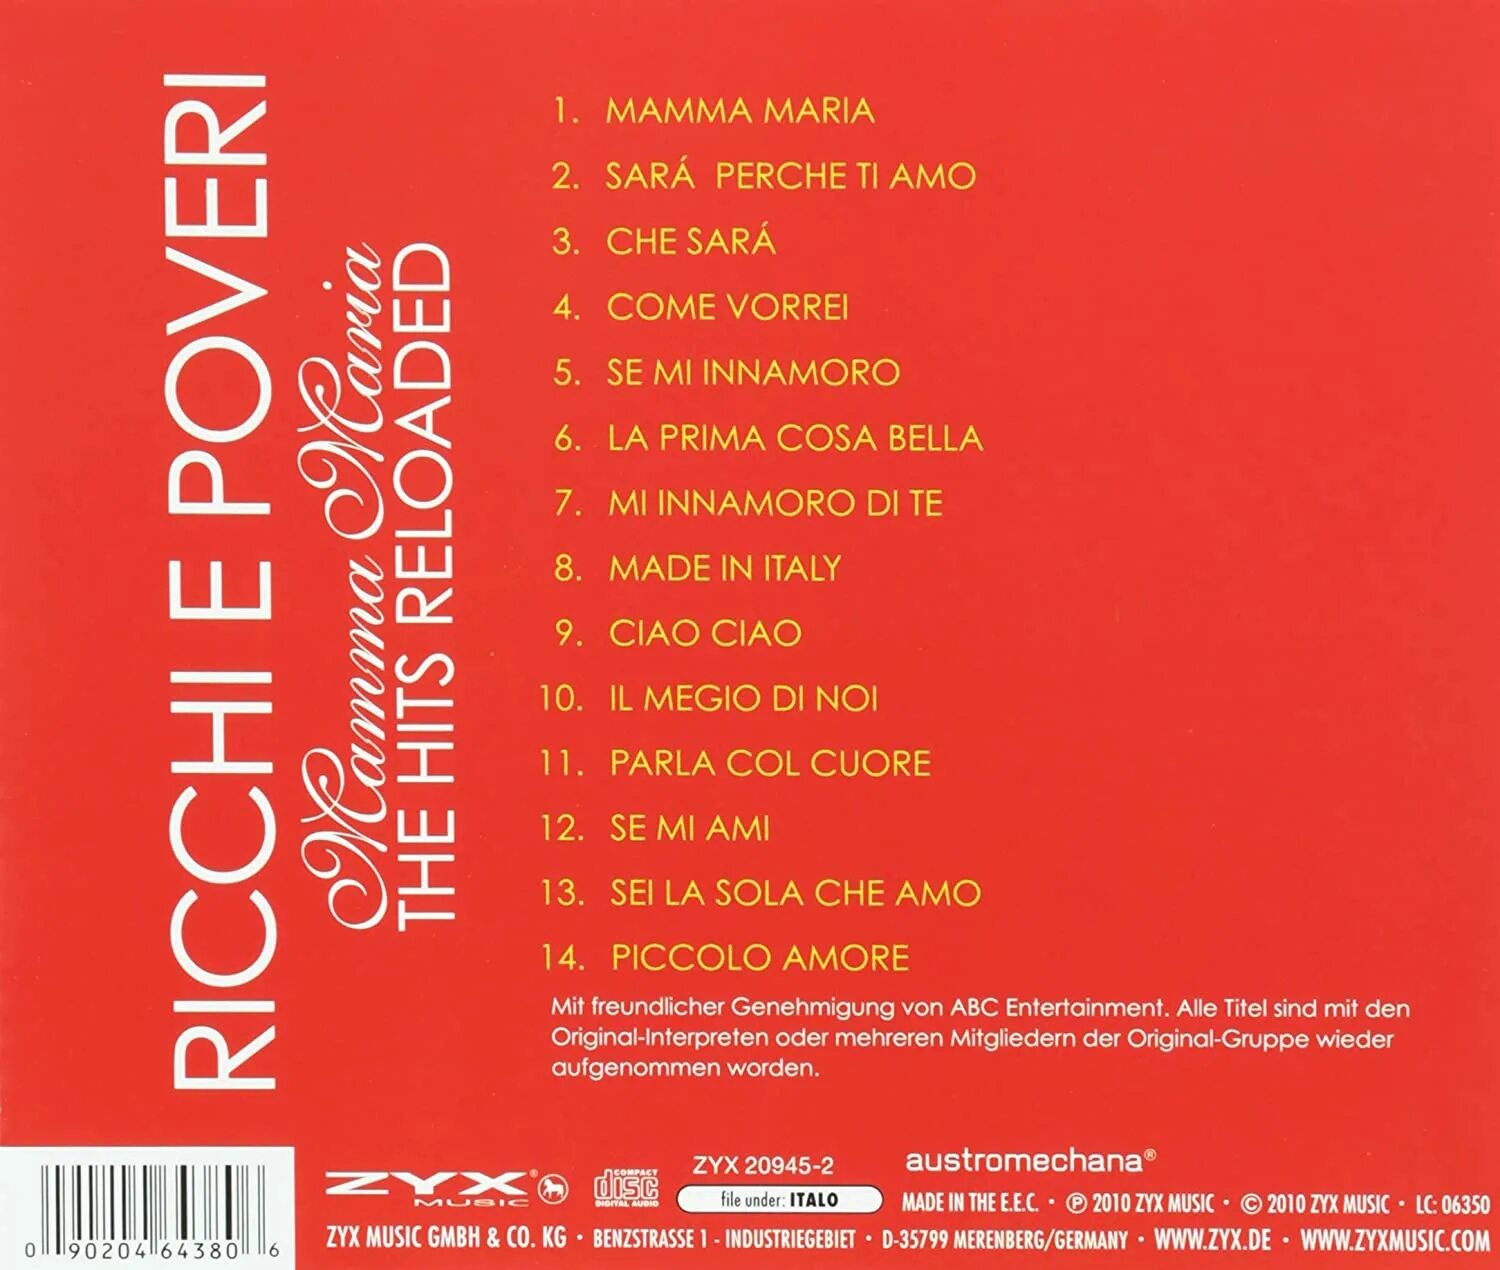 Mamma maria ricchi. Mamma Maria: the Hits Reloaded Ricchi e Poveri. Ricchi e Poveri - (1994) - the collection. Ricchi e Poveri 2009 Greatest Hits.